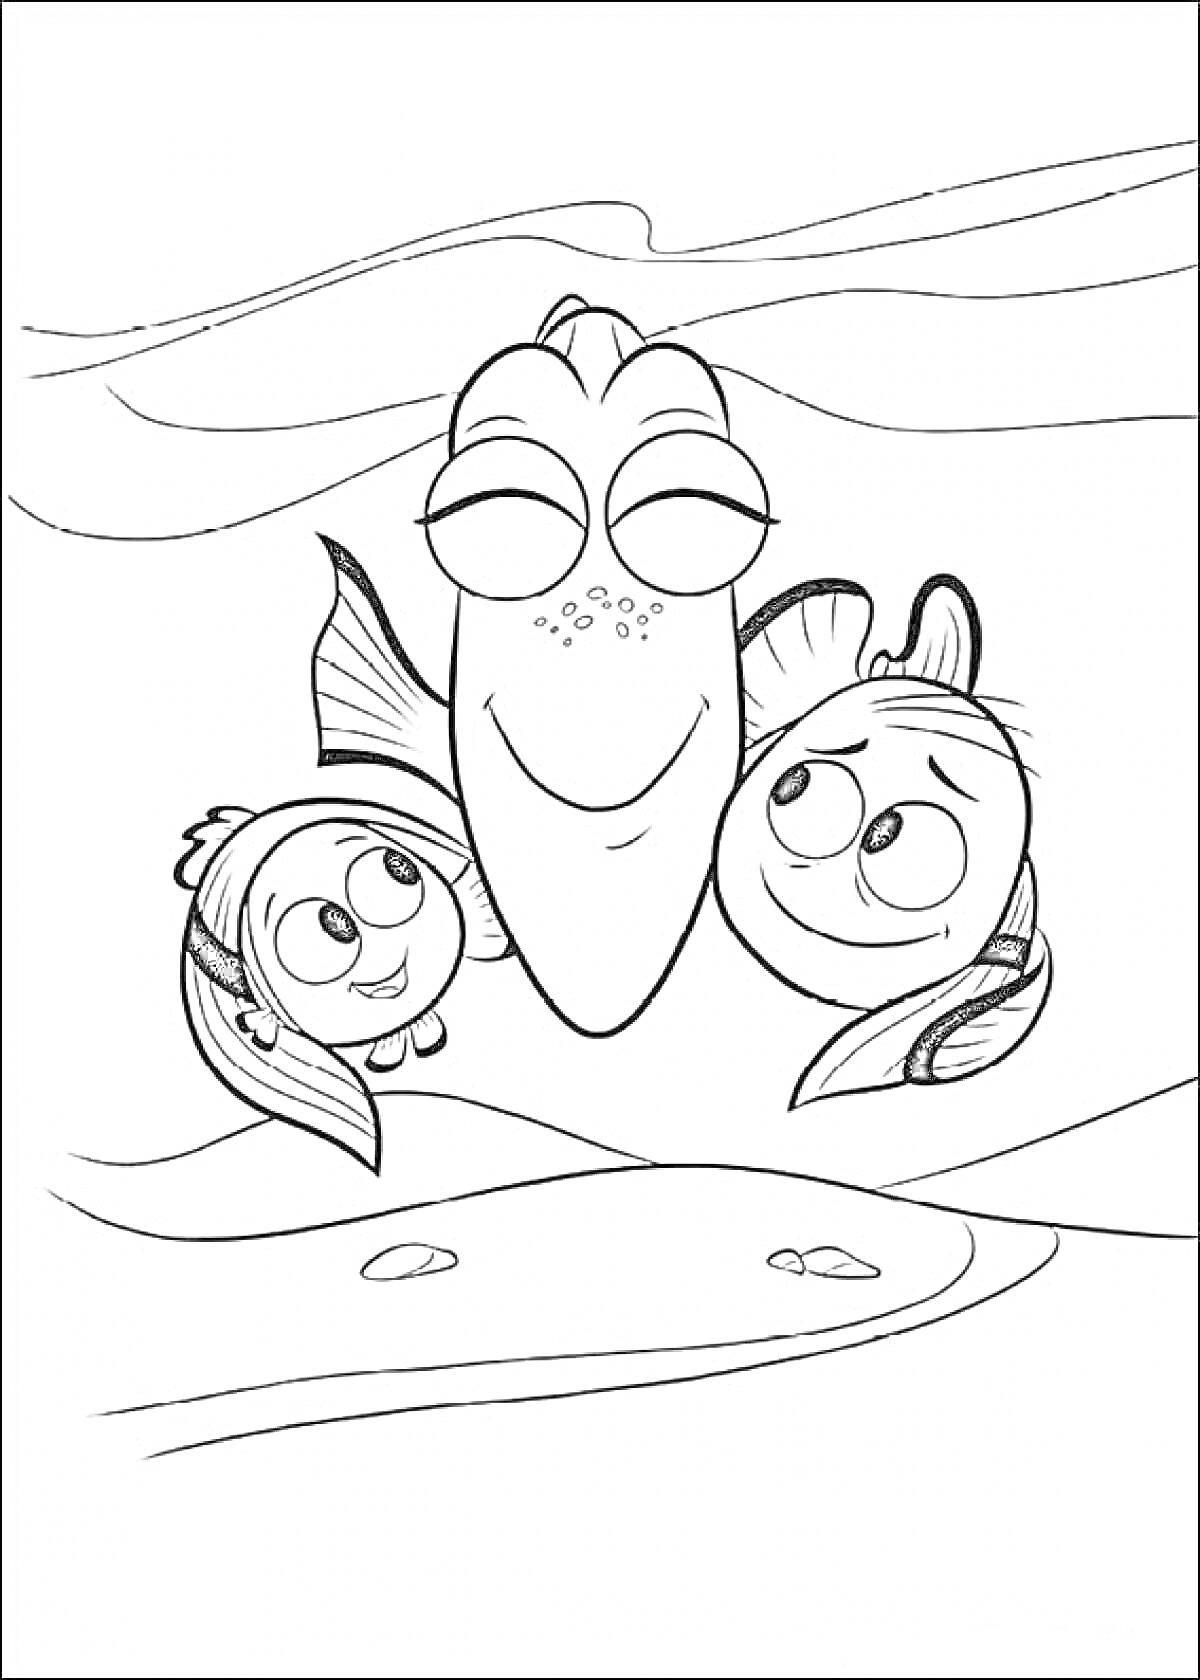 Раскраска Дори и два других персонажа на подводном фоне